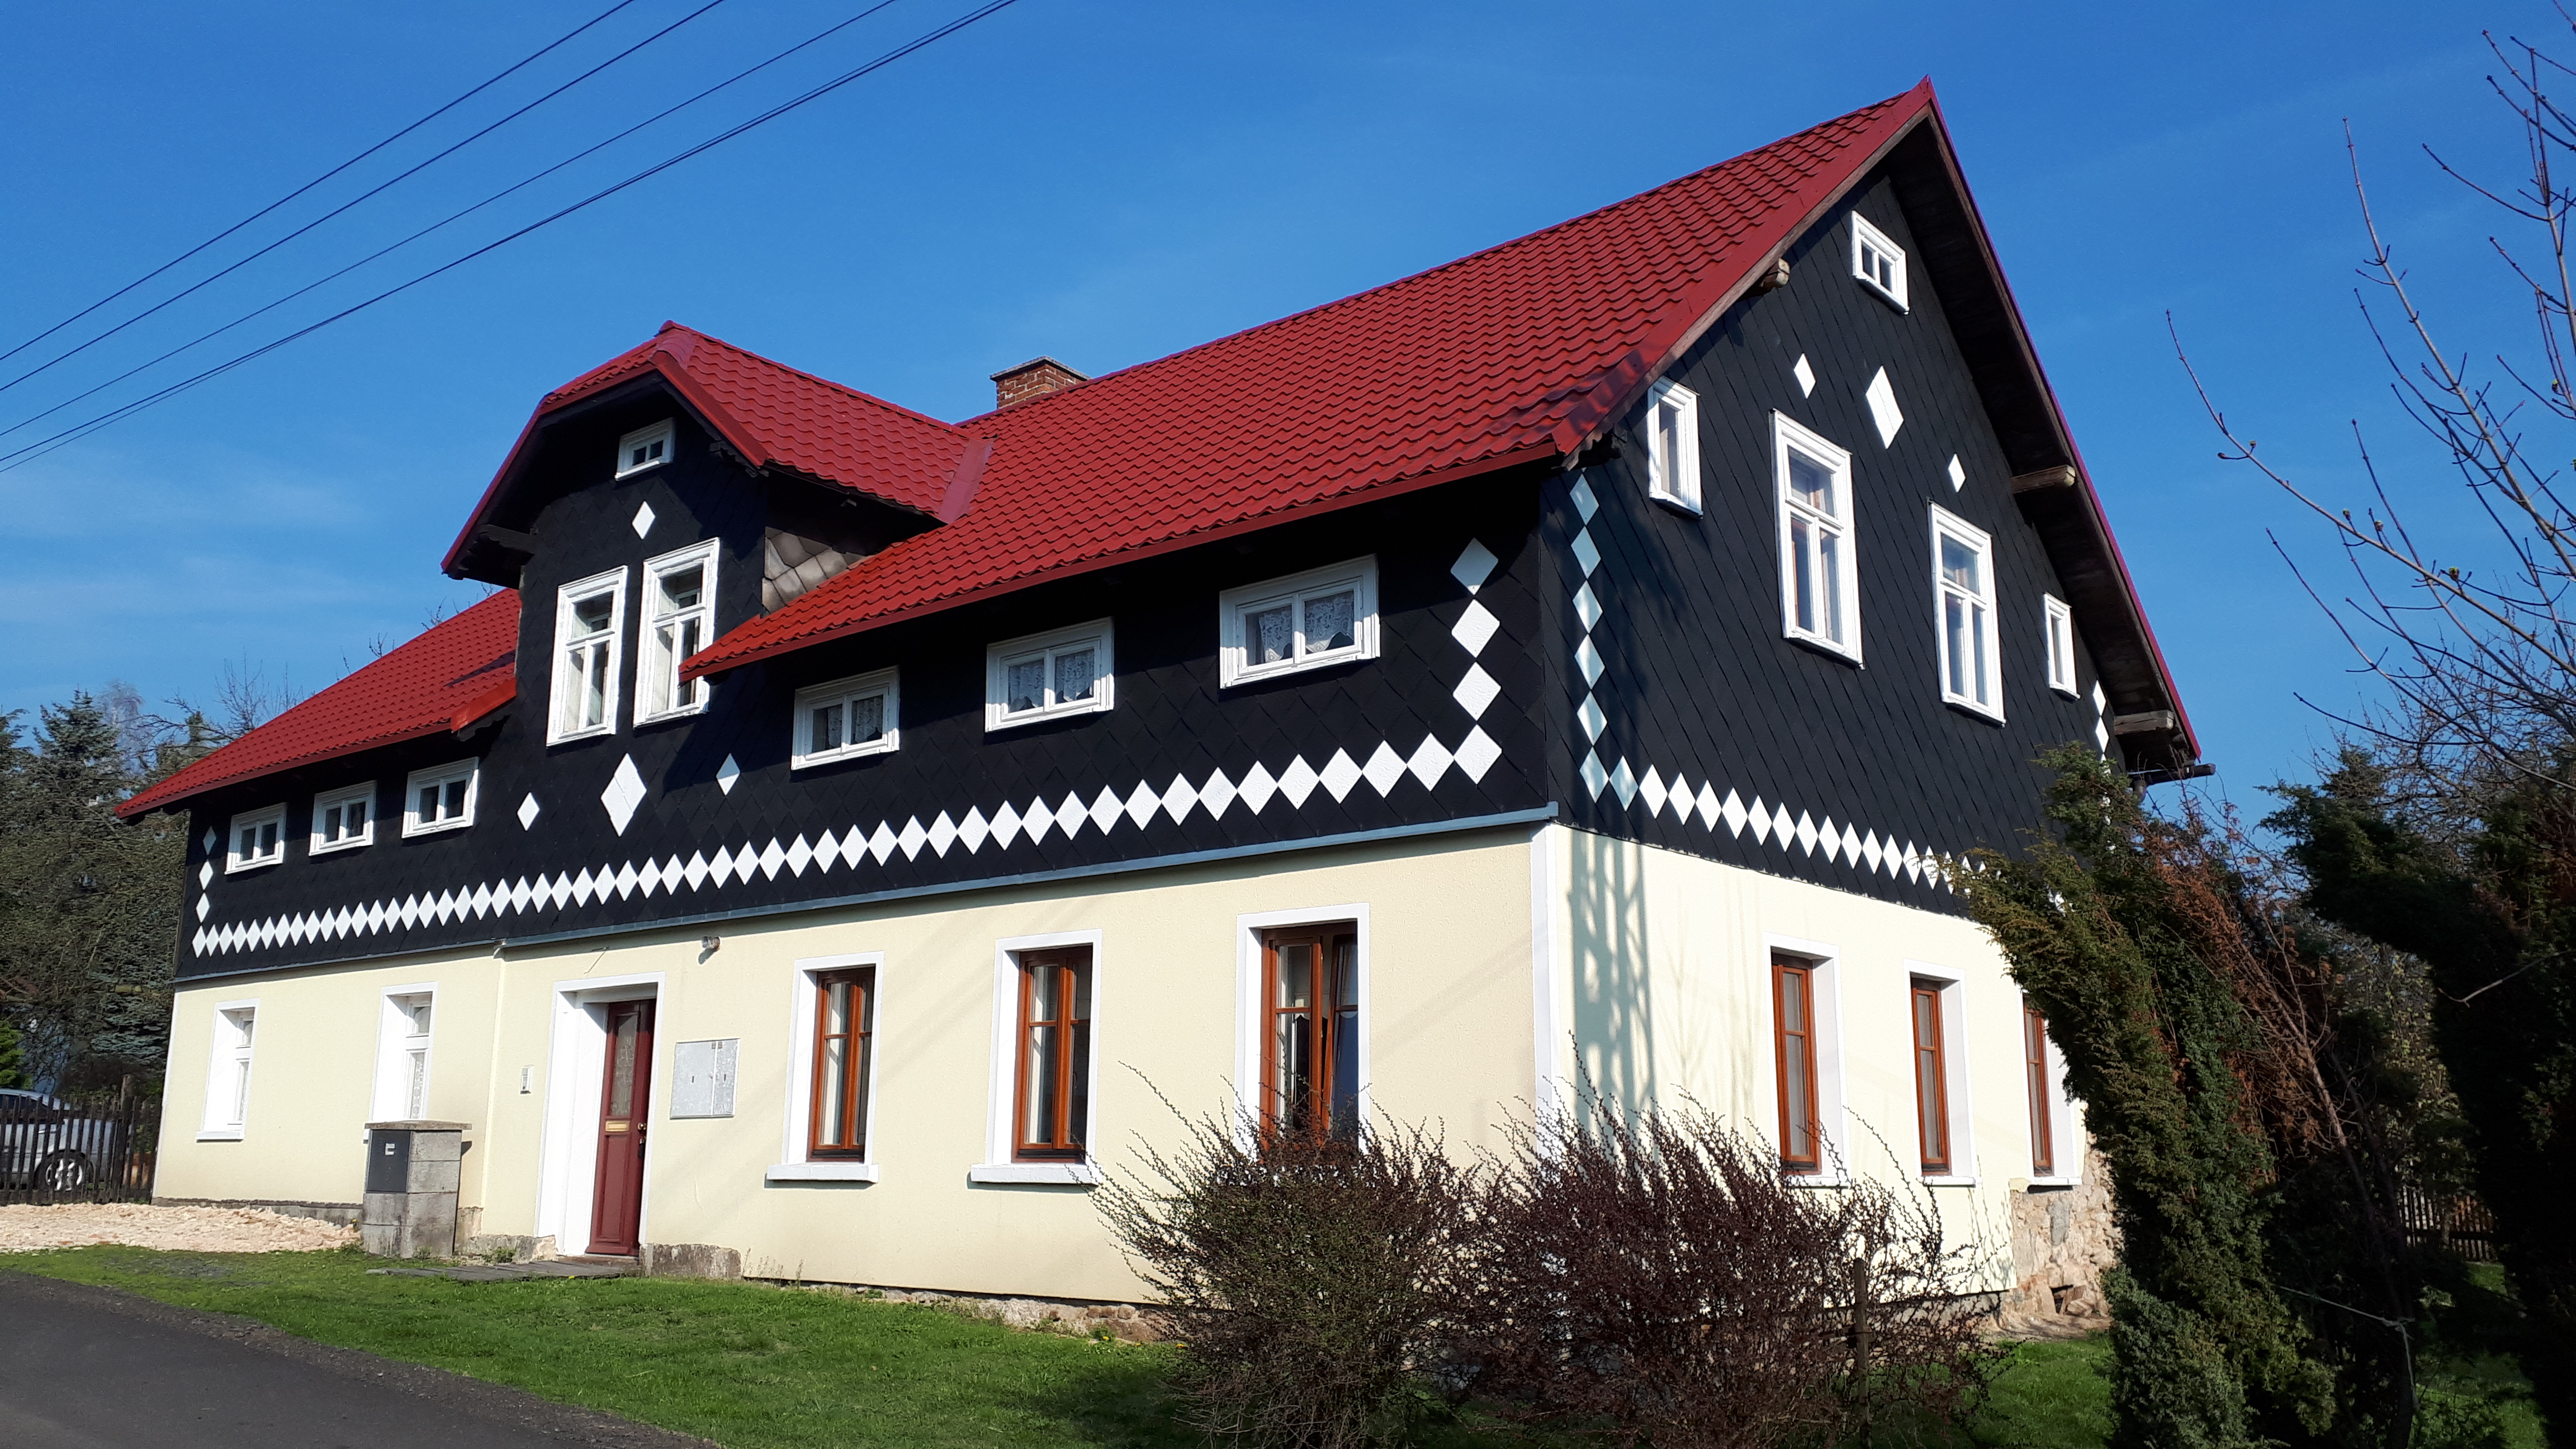 Te koop: Statig familiehuis in Zahrady, Krasna Lipa, Tsjechisch Zwitserland, Tsjechie.